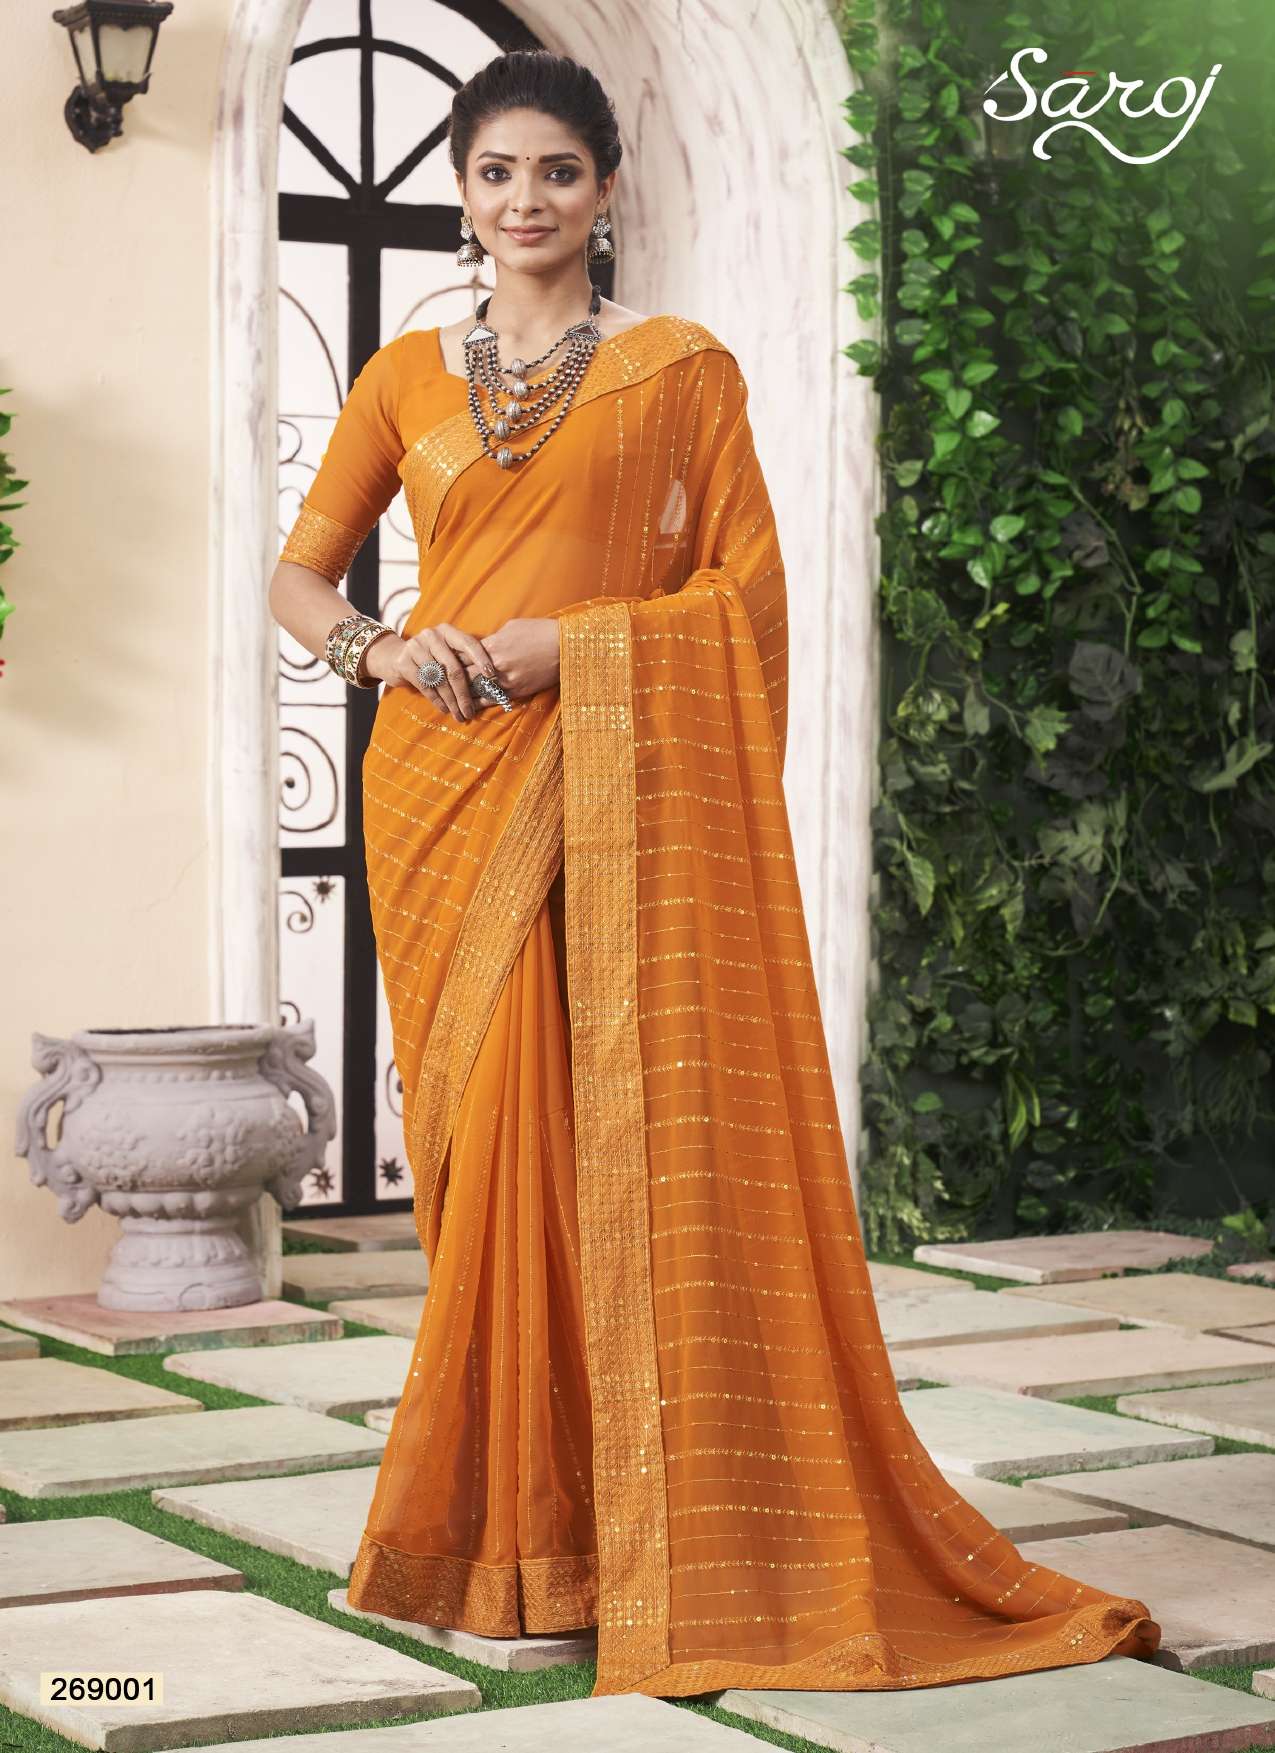 Saroj Shinning star Designer Georgette Saree Wholesale catalog